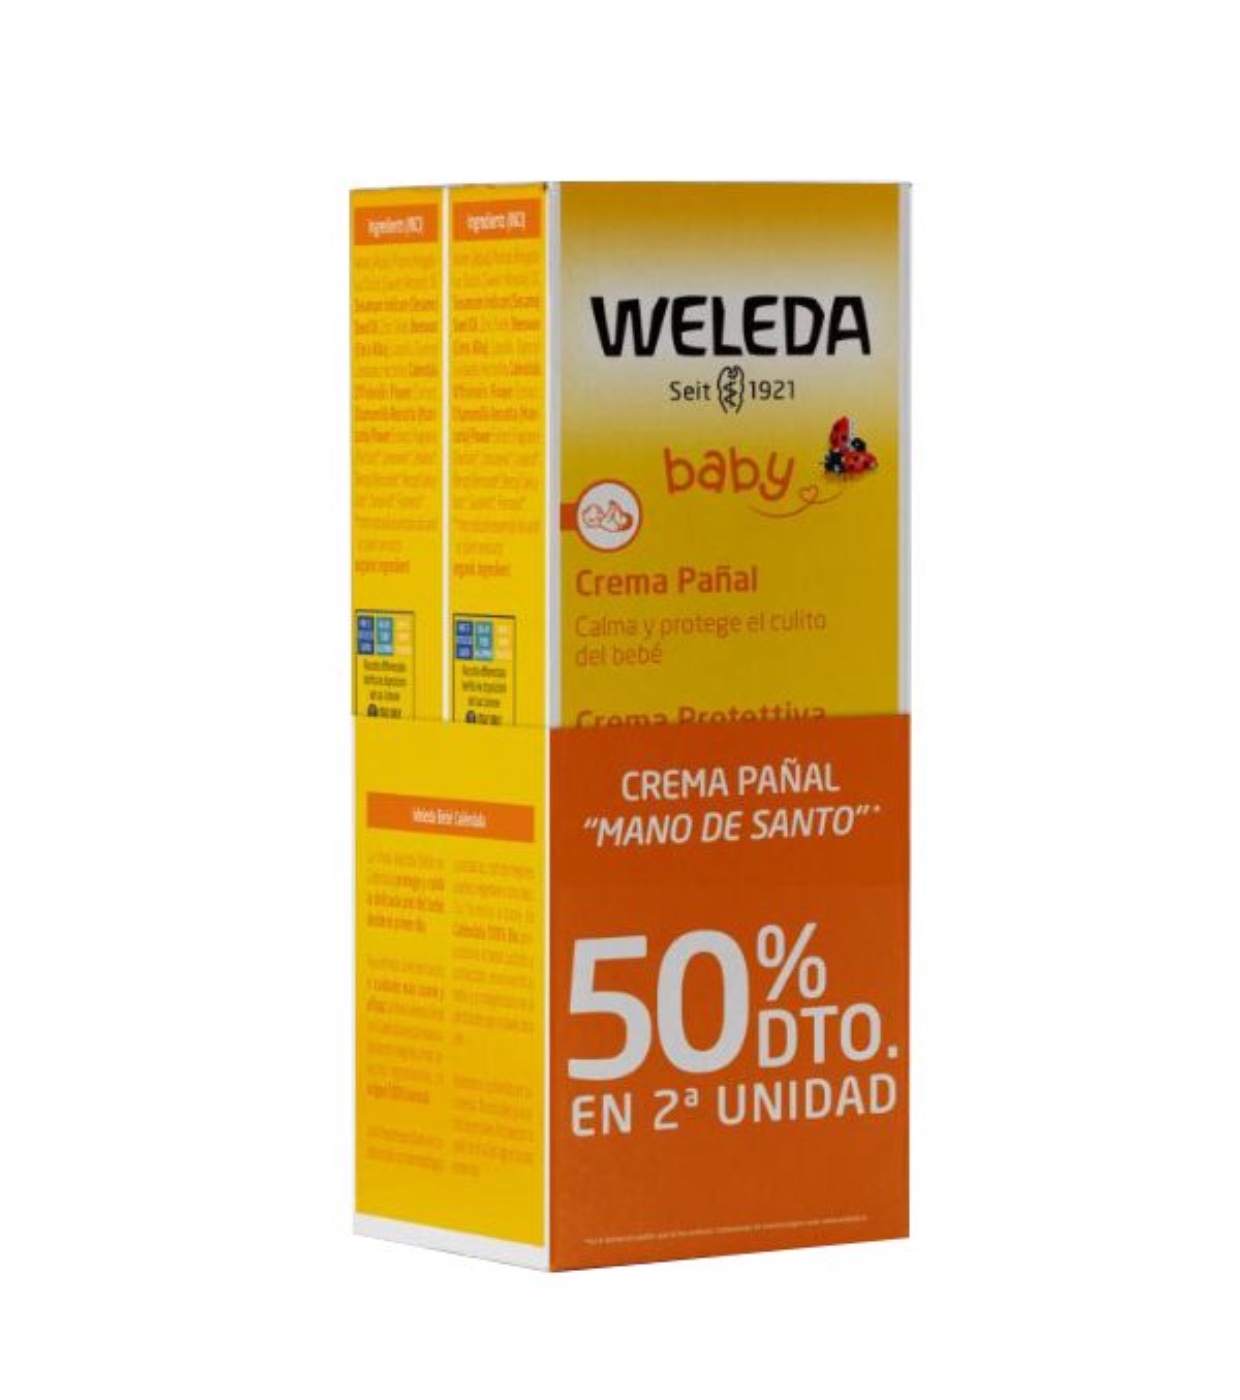 Crema para zona del pañal de caléndula, 75 ml, Weleda - Weleda